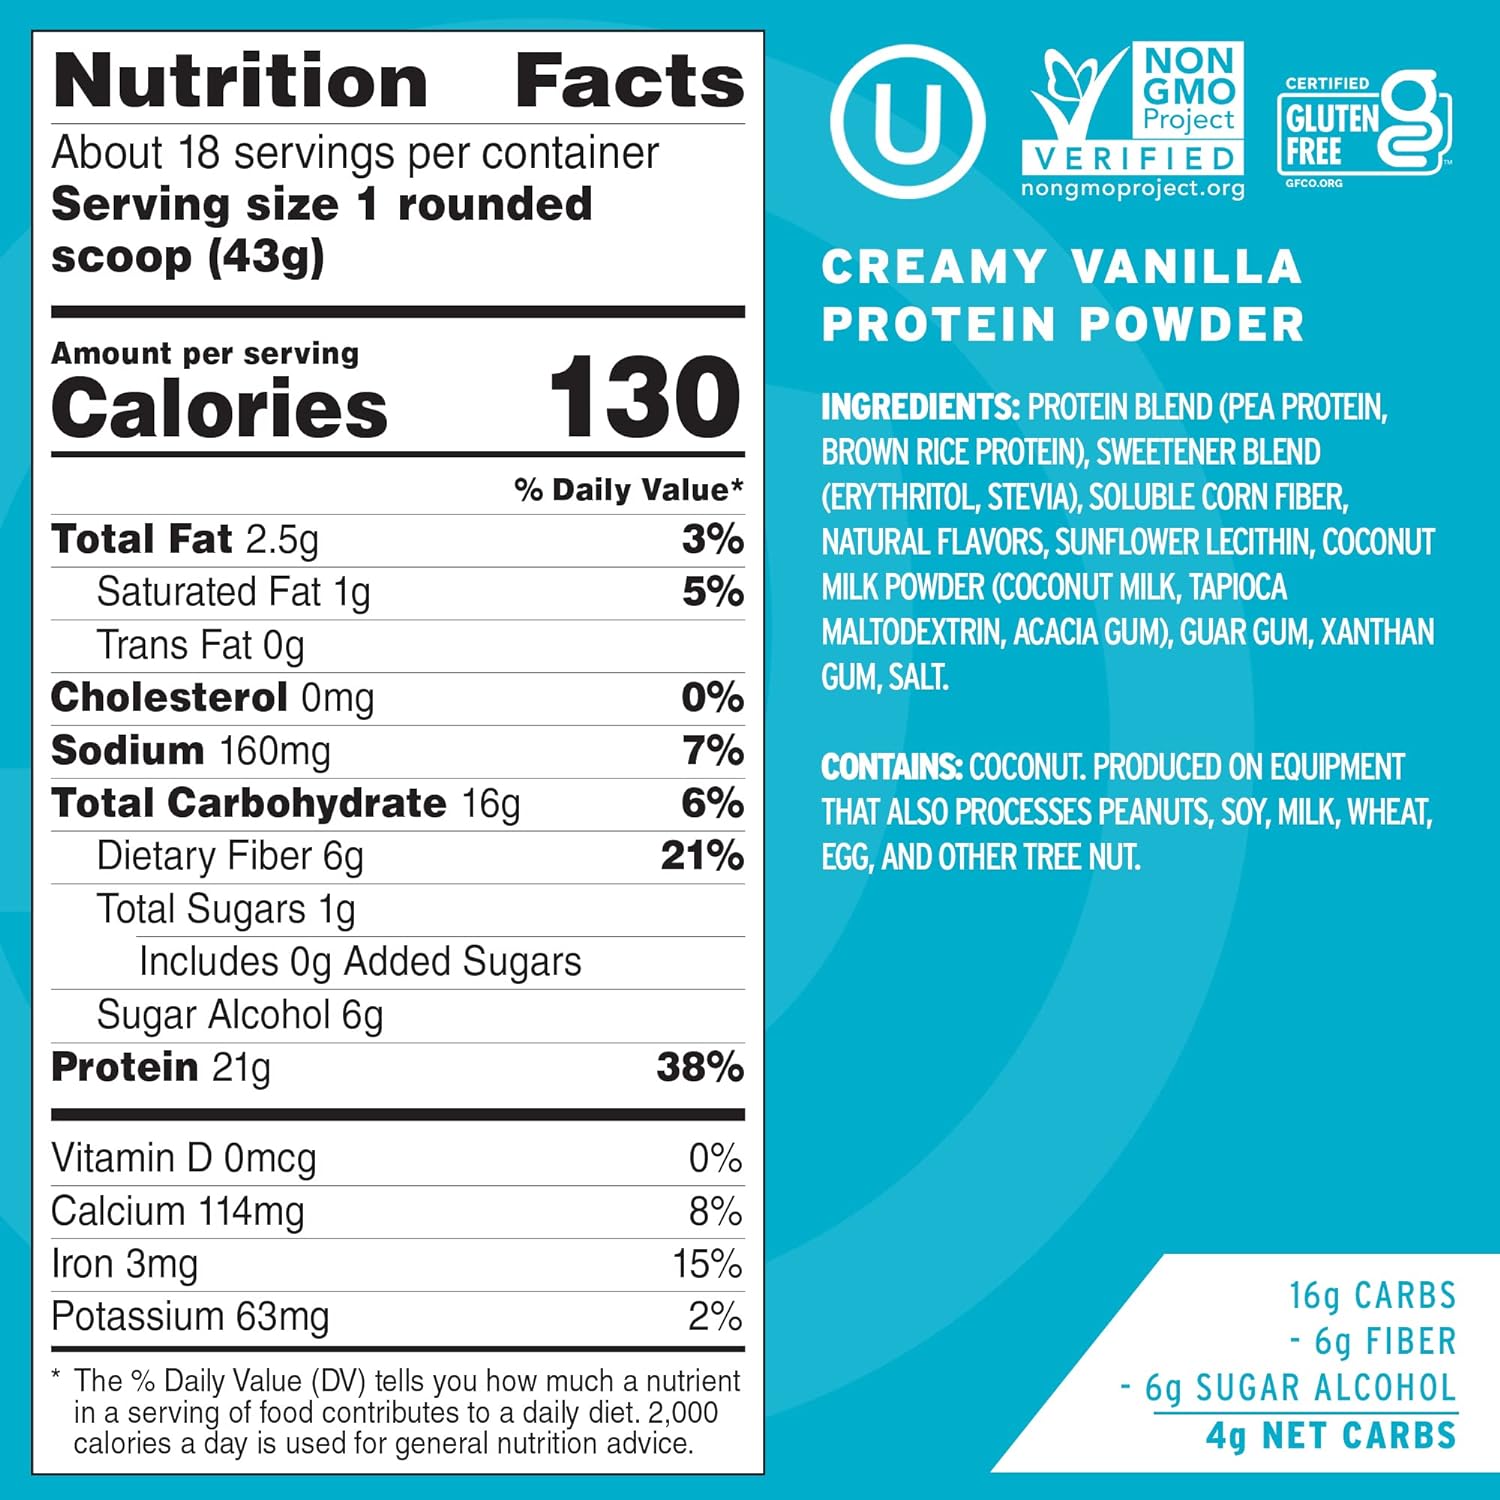 No Cow Vegan Protein Powder, Vanilla, 21g Plant Based Protein, Recycla